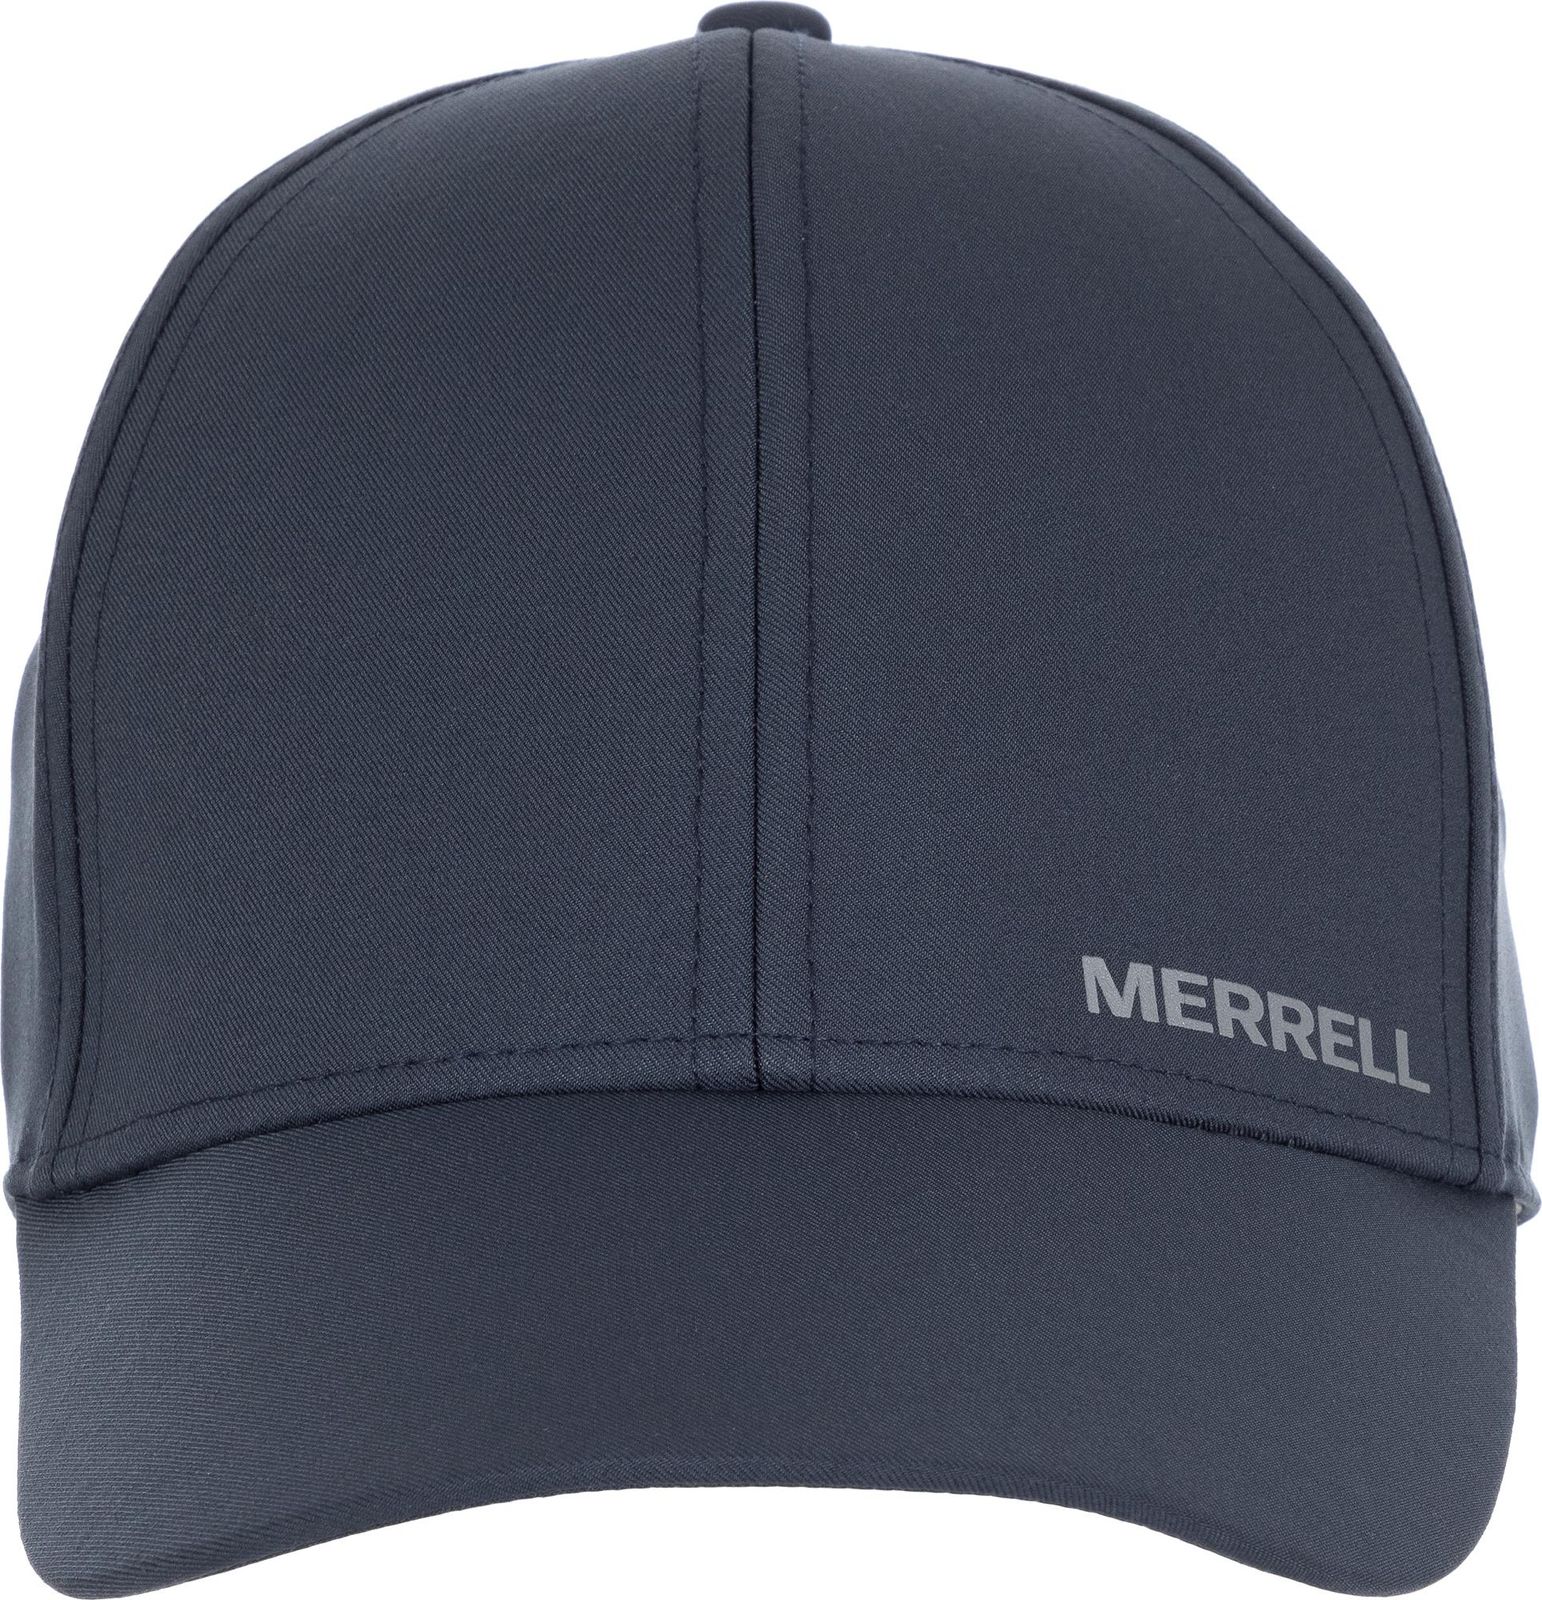   Merrell Adult Cap, : -. S19AMRCPM01-Z4.  